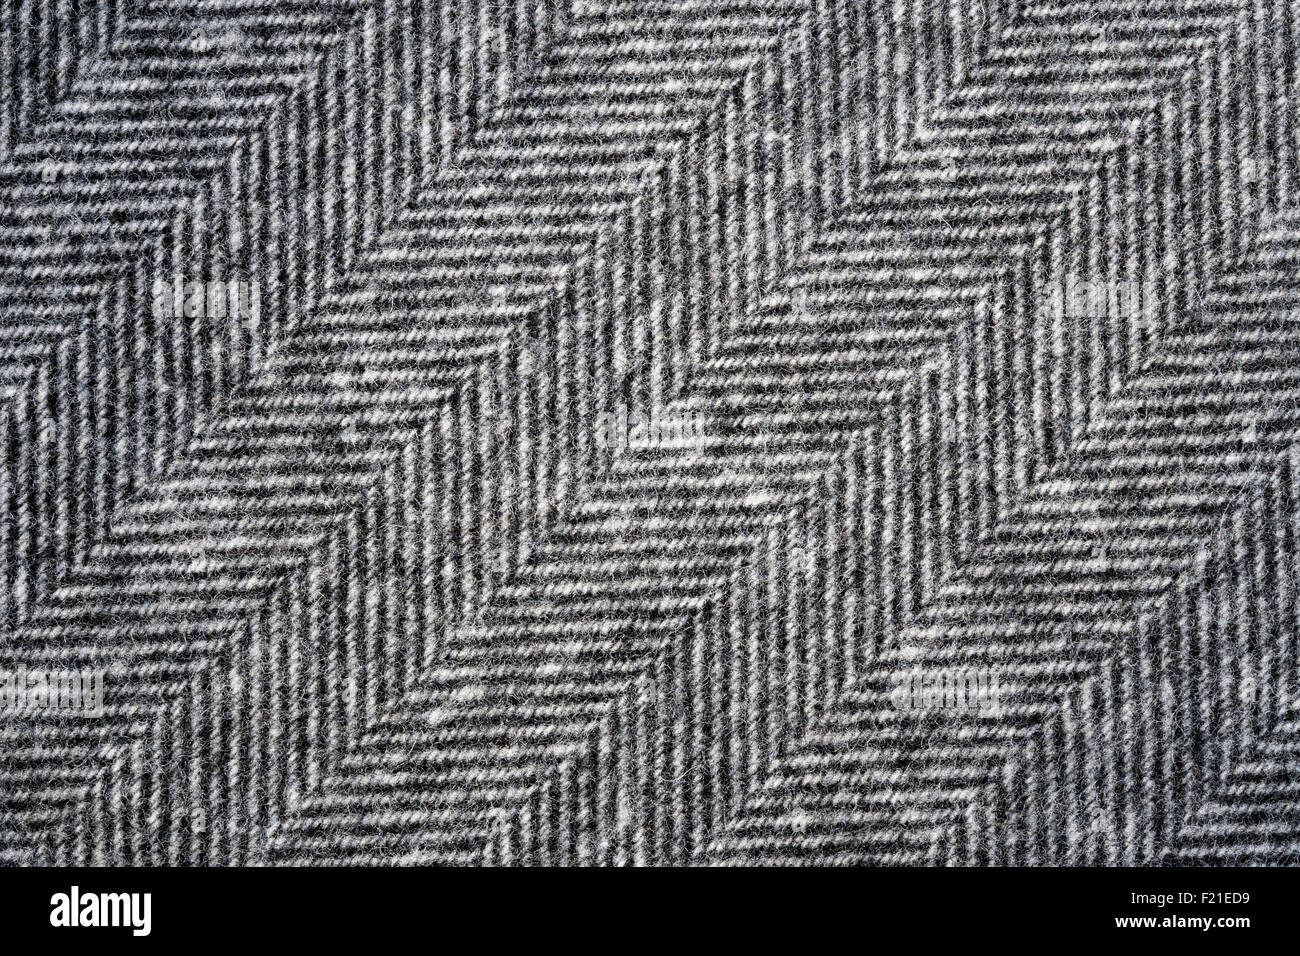 Herringbone tweed background with closeup on wool fabric texture Stock Photo